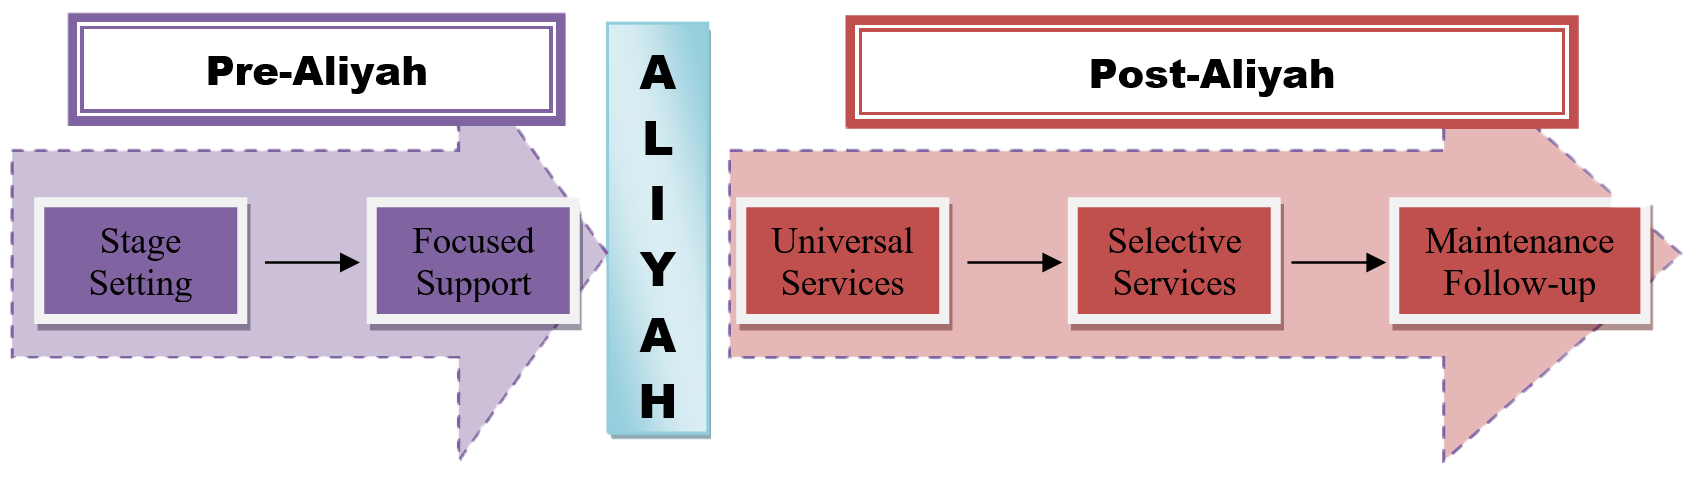 Aliyah Continuum Framework